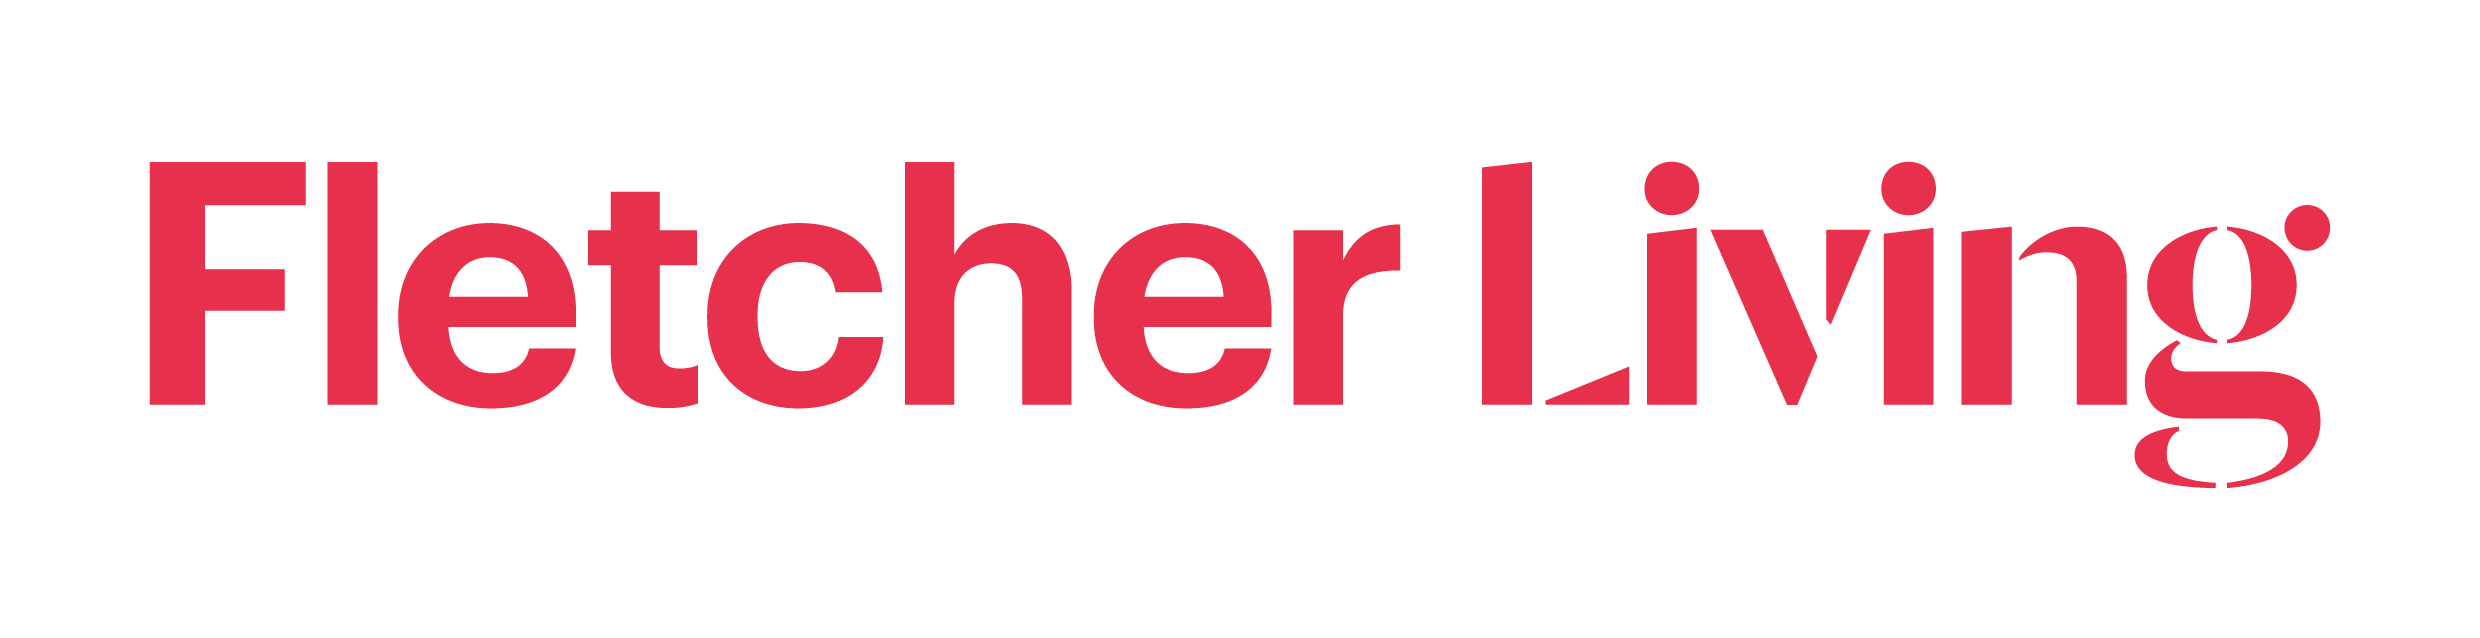 Fletcher+Living+clearcut+logo